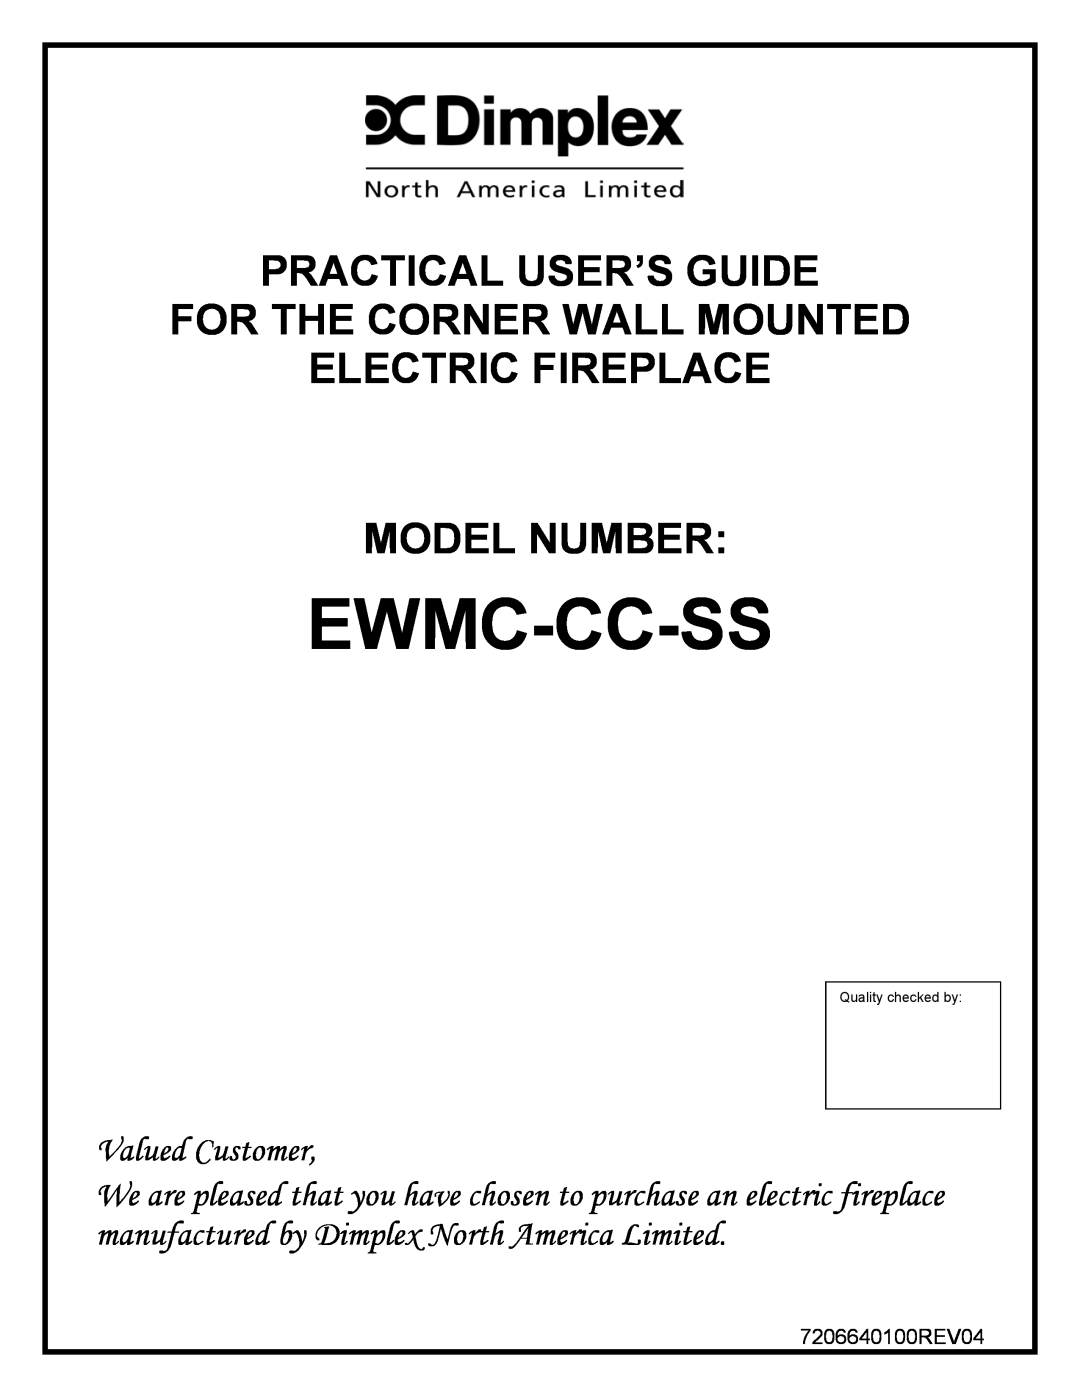 Dimplex EWMC-CC-SS manual Ewmc-Cc-Ss, Practical User’S Guide, For The Corner Wall Mounted Electric Fireplace, Model Number 